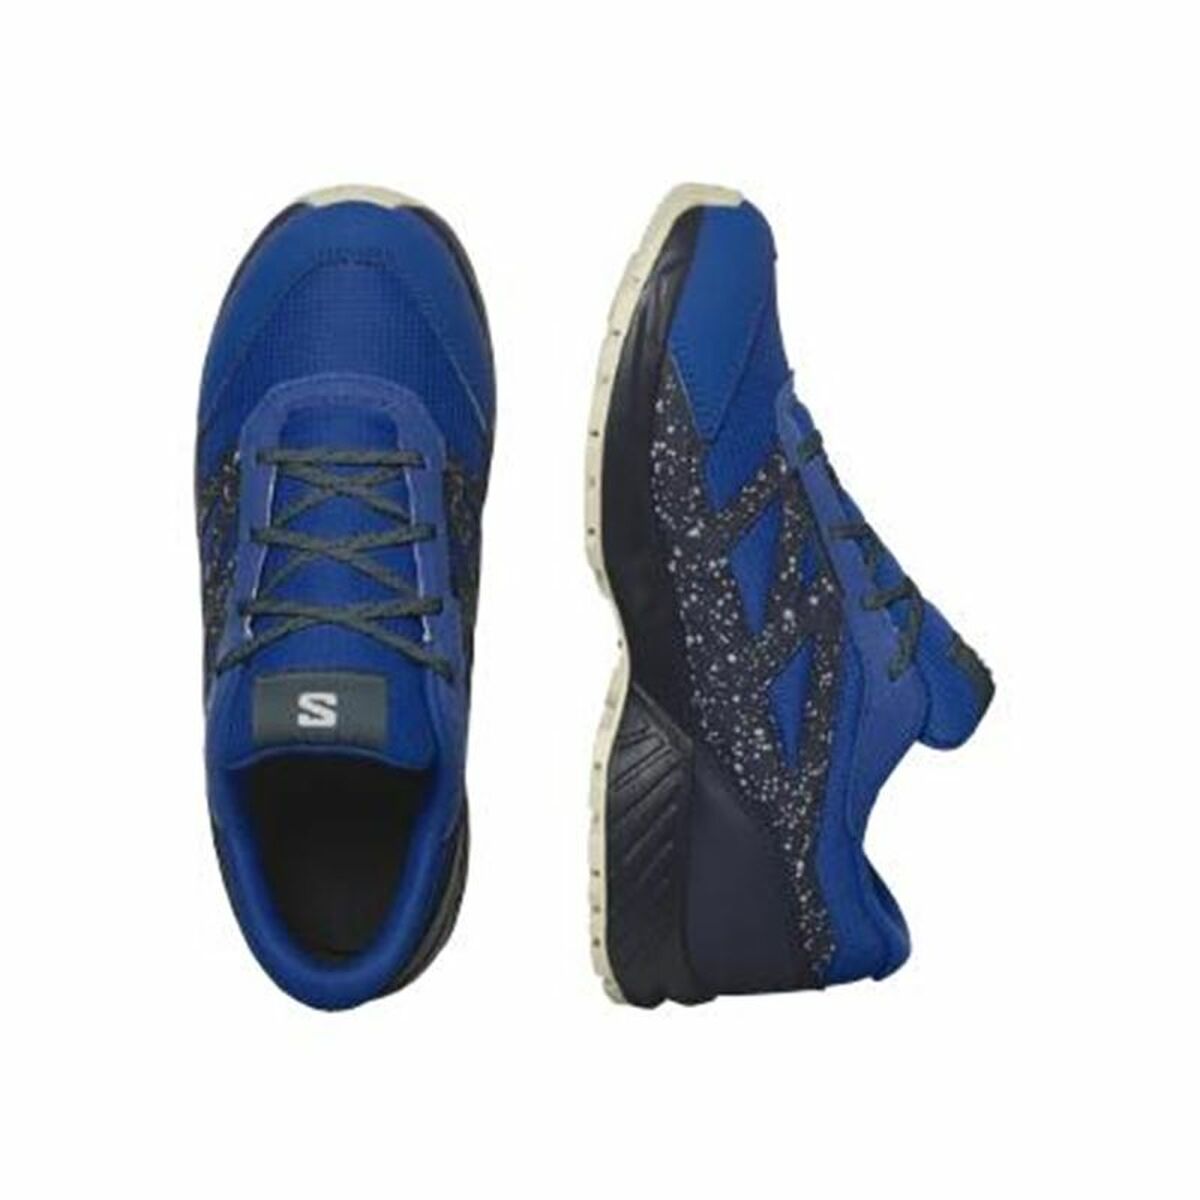 Sports Shoes for Kids Salomon Outway Climasalomon Blue